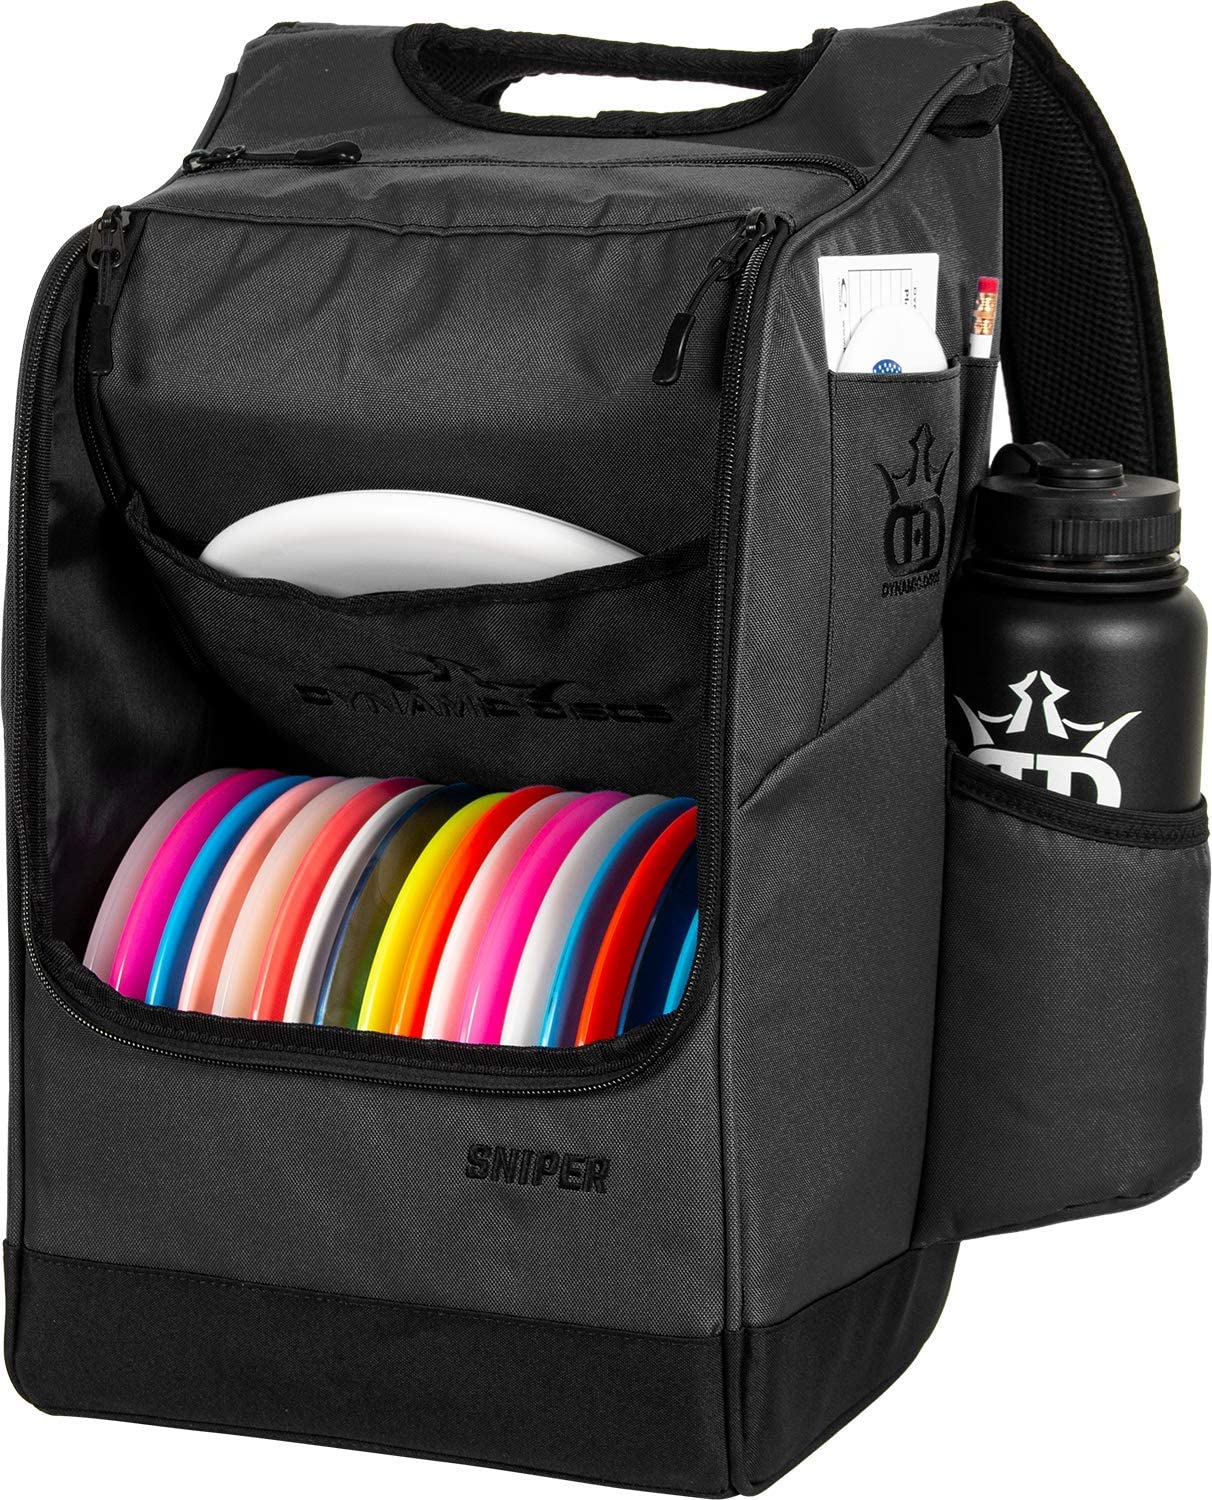 Dynamic Discs Sniper Backpack Disc Golf Bag - Heather Charcoal